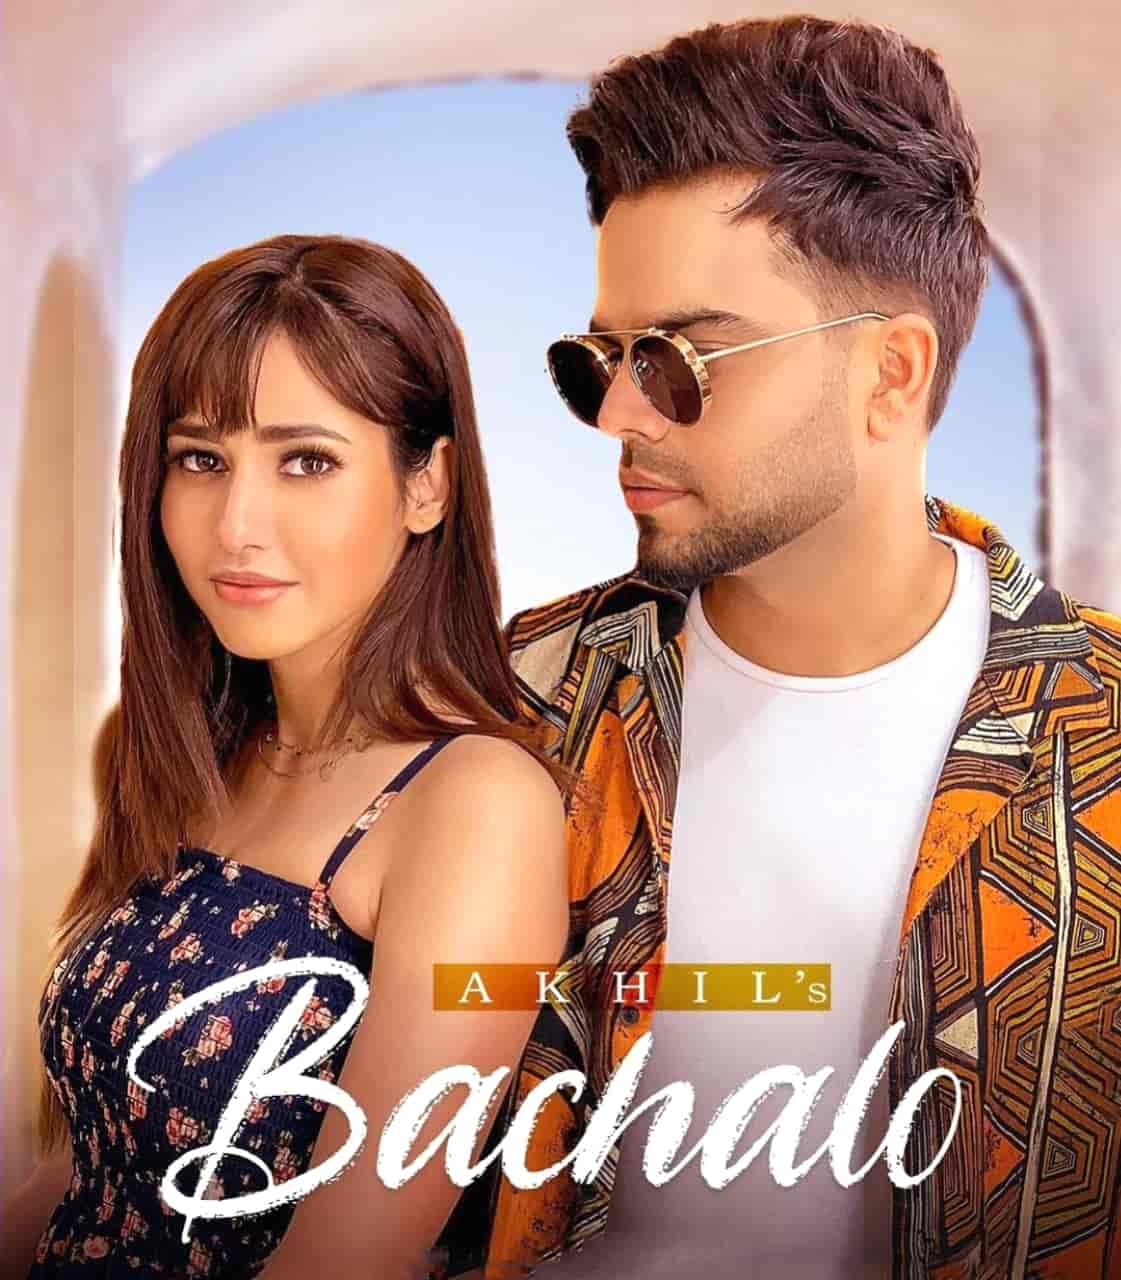 Bachalo Punjabi Song Image Features Akhil and Rumman Shahrukh